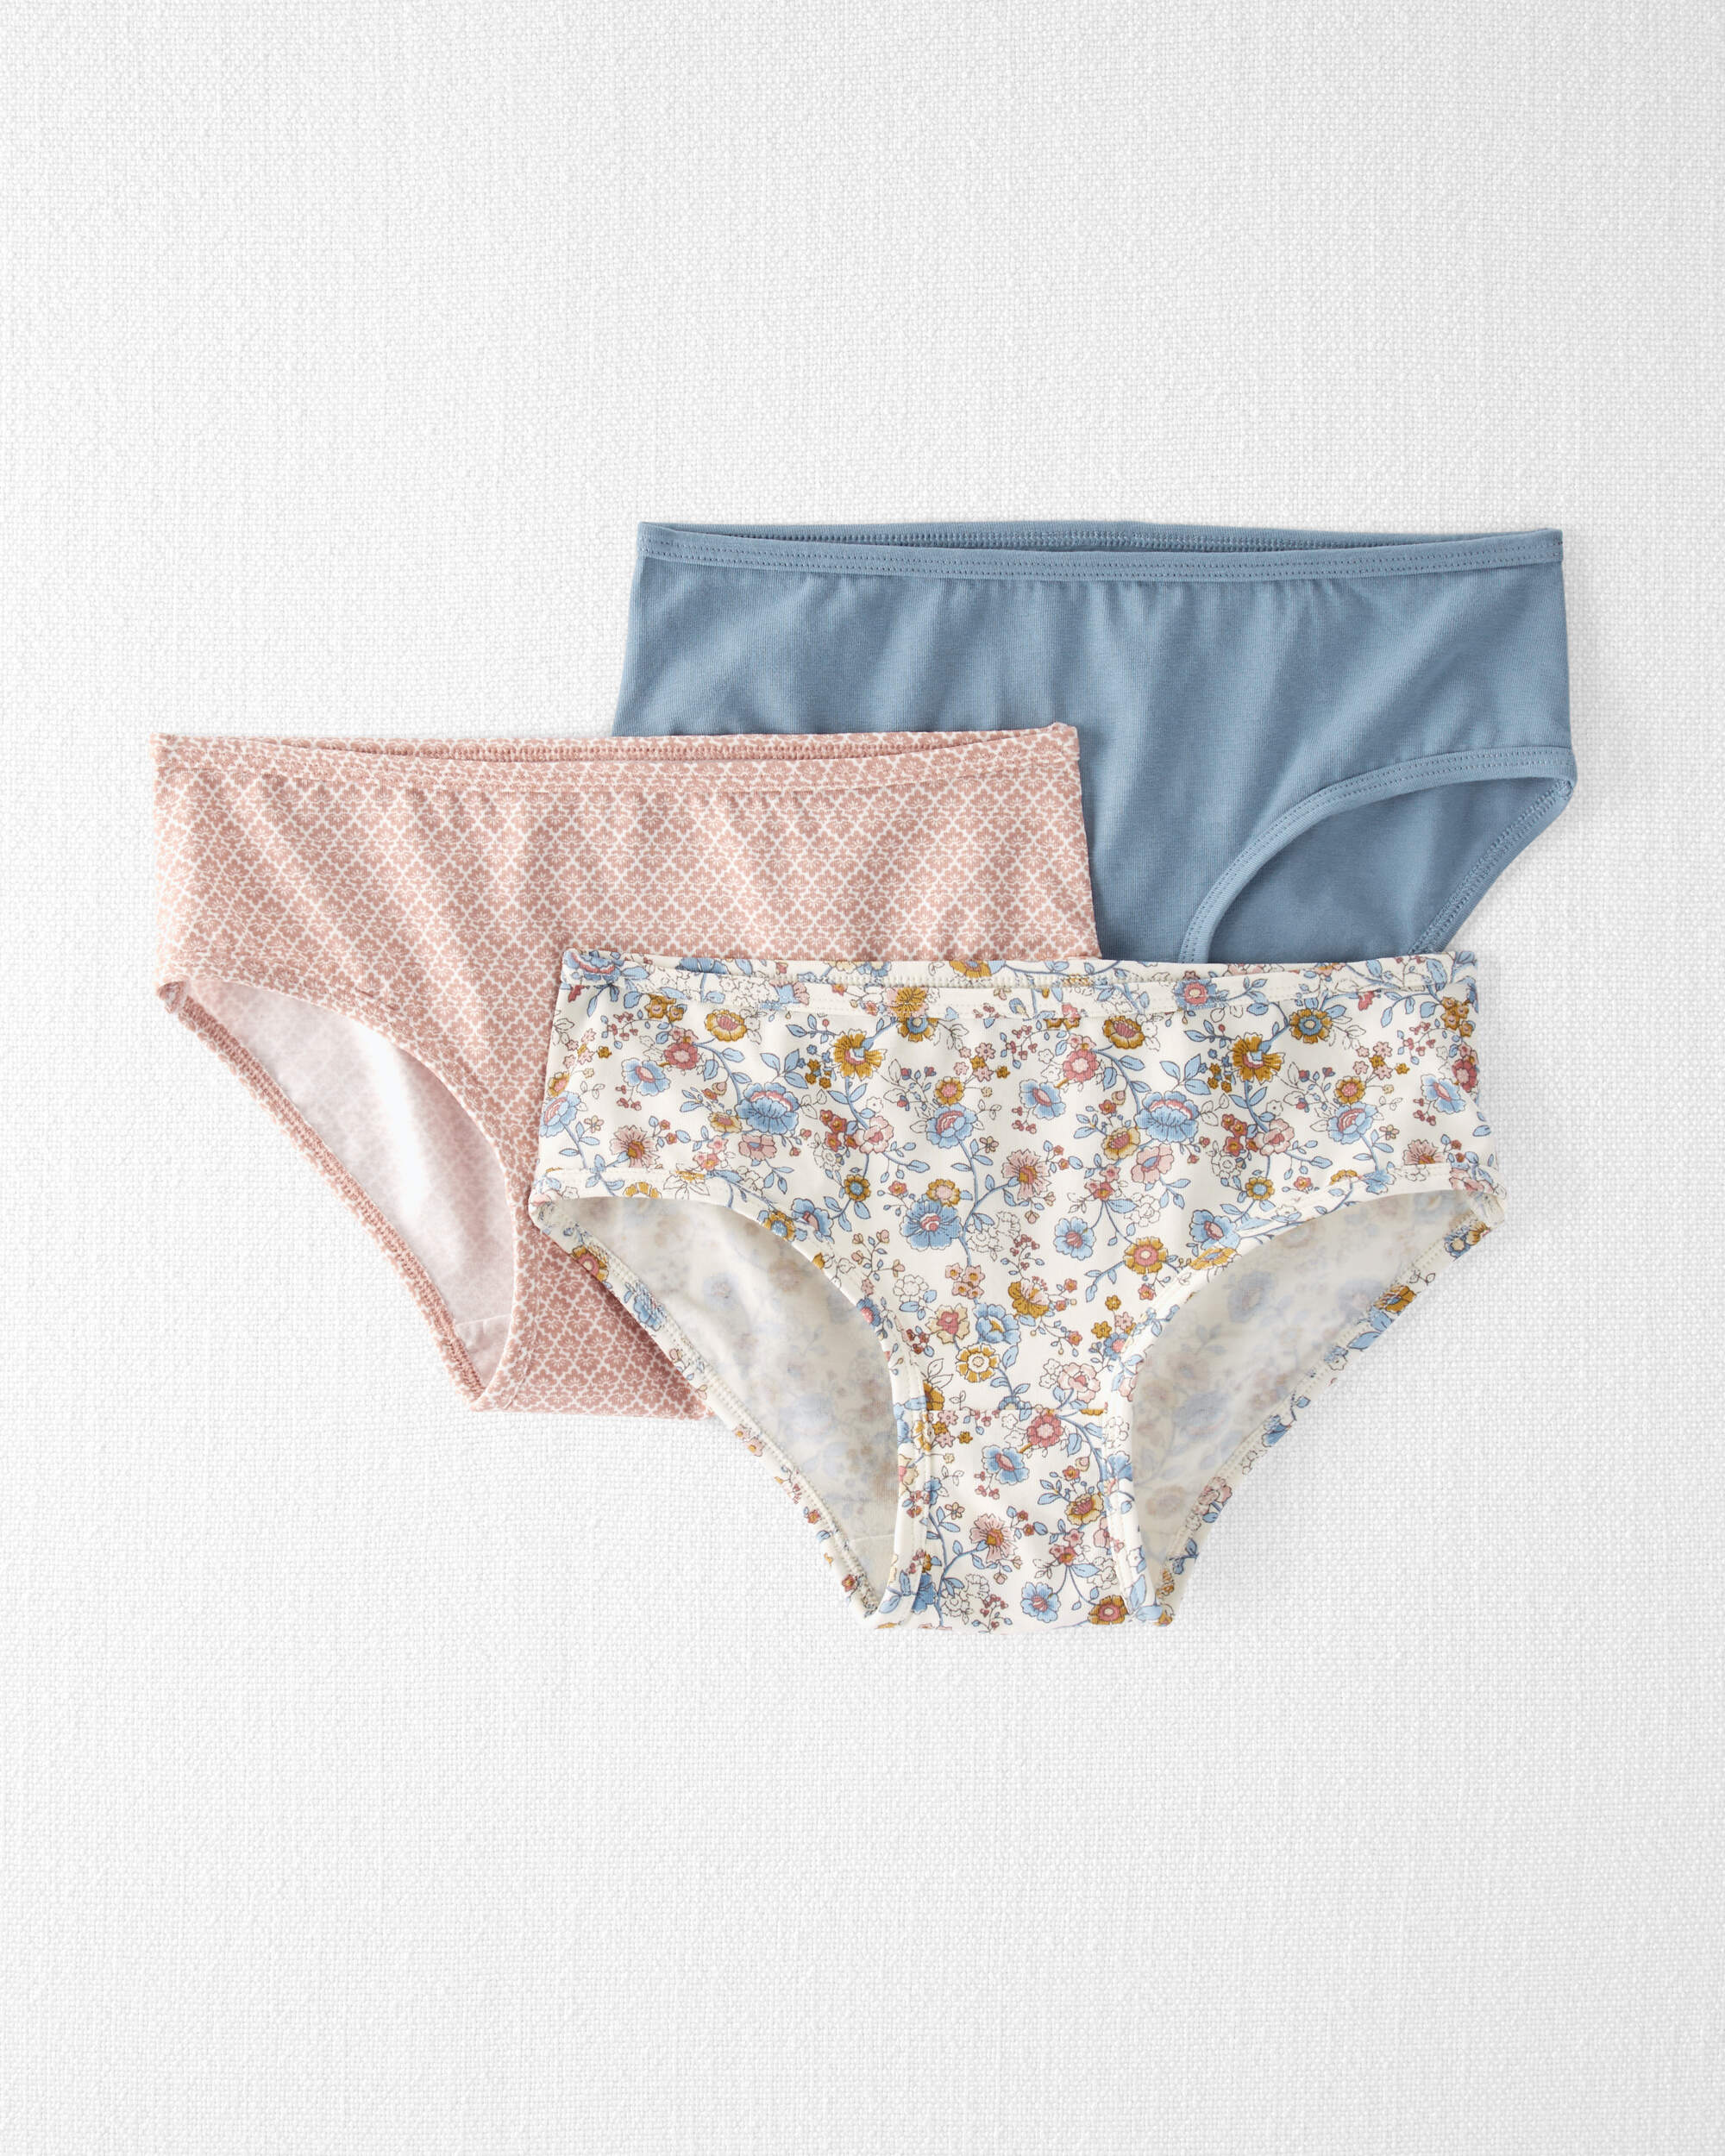 Girls Cotton Blend Assorted Printed Underwear Size 8 - at